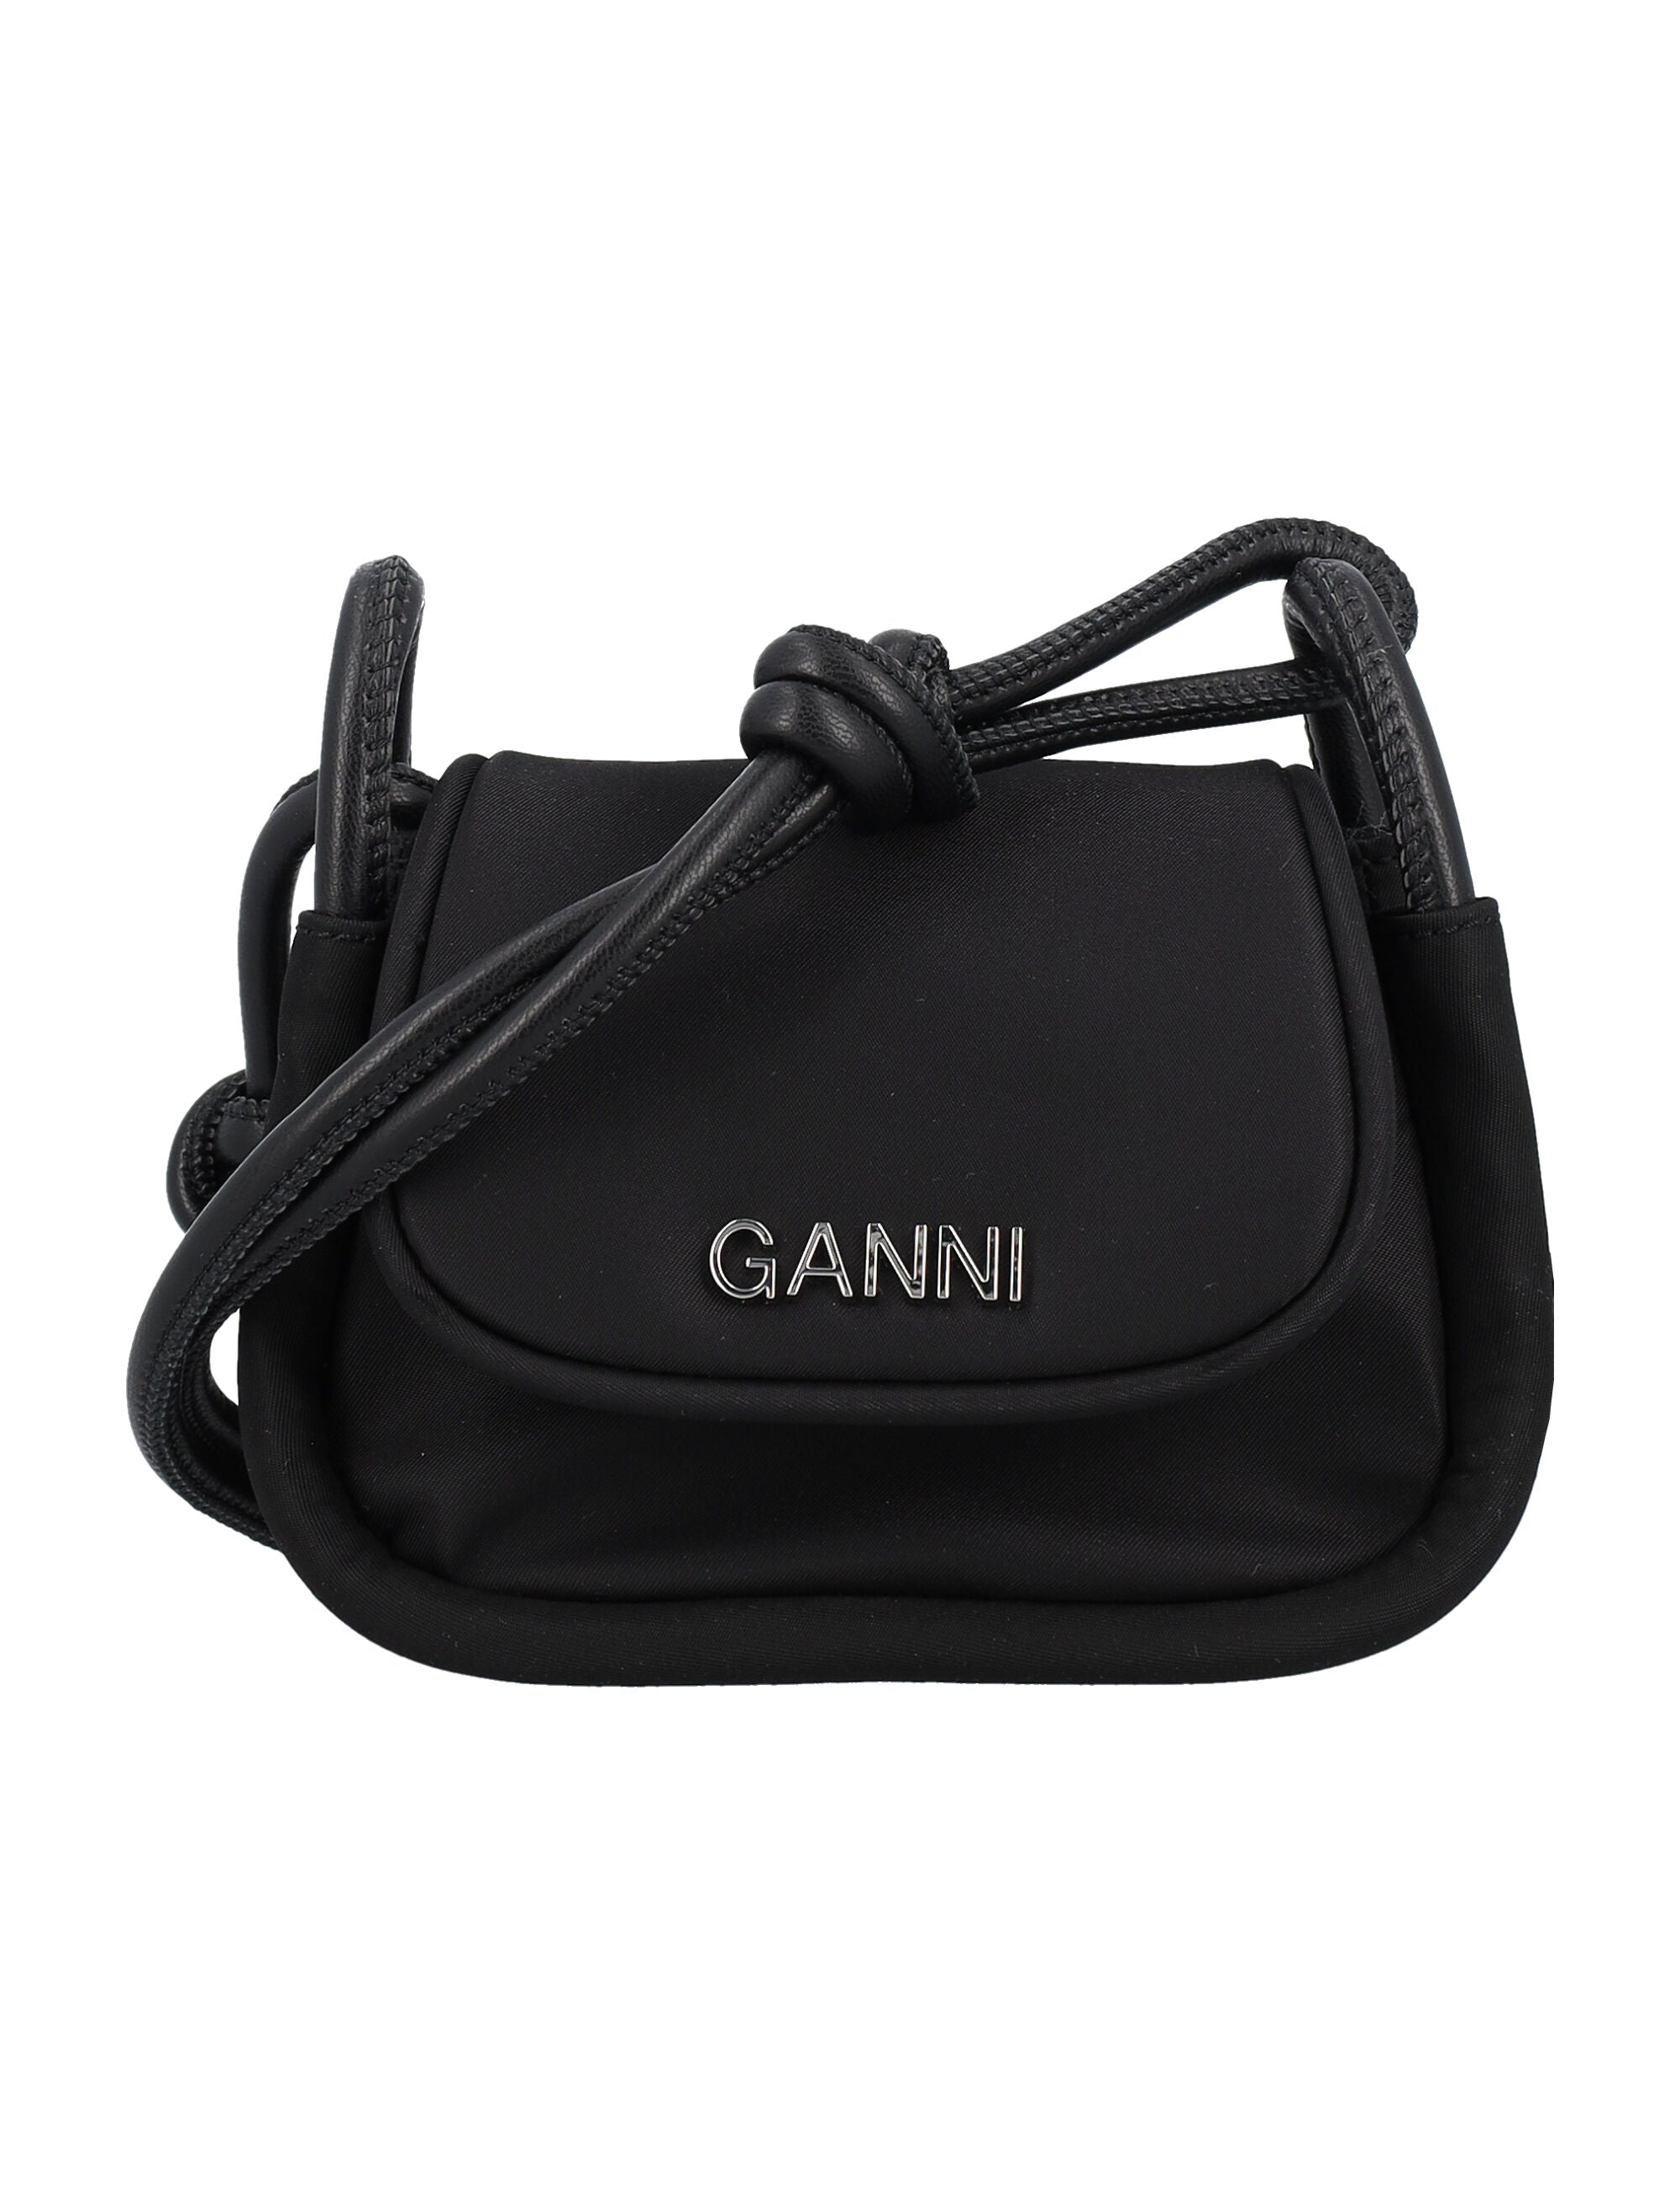 GANNI: Knot Mini Flap bag in nylon - Black  Ganni mini bag A4903 online at